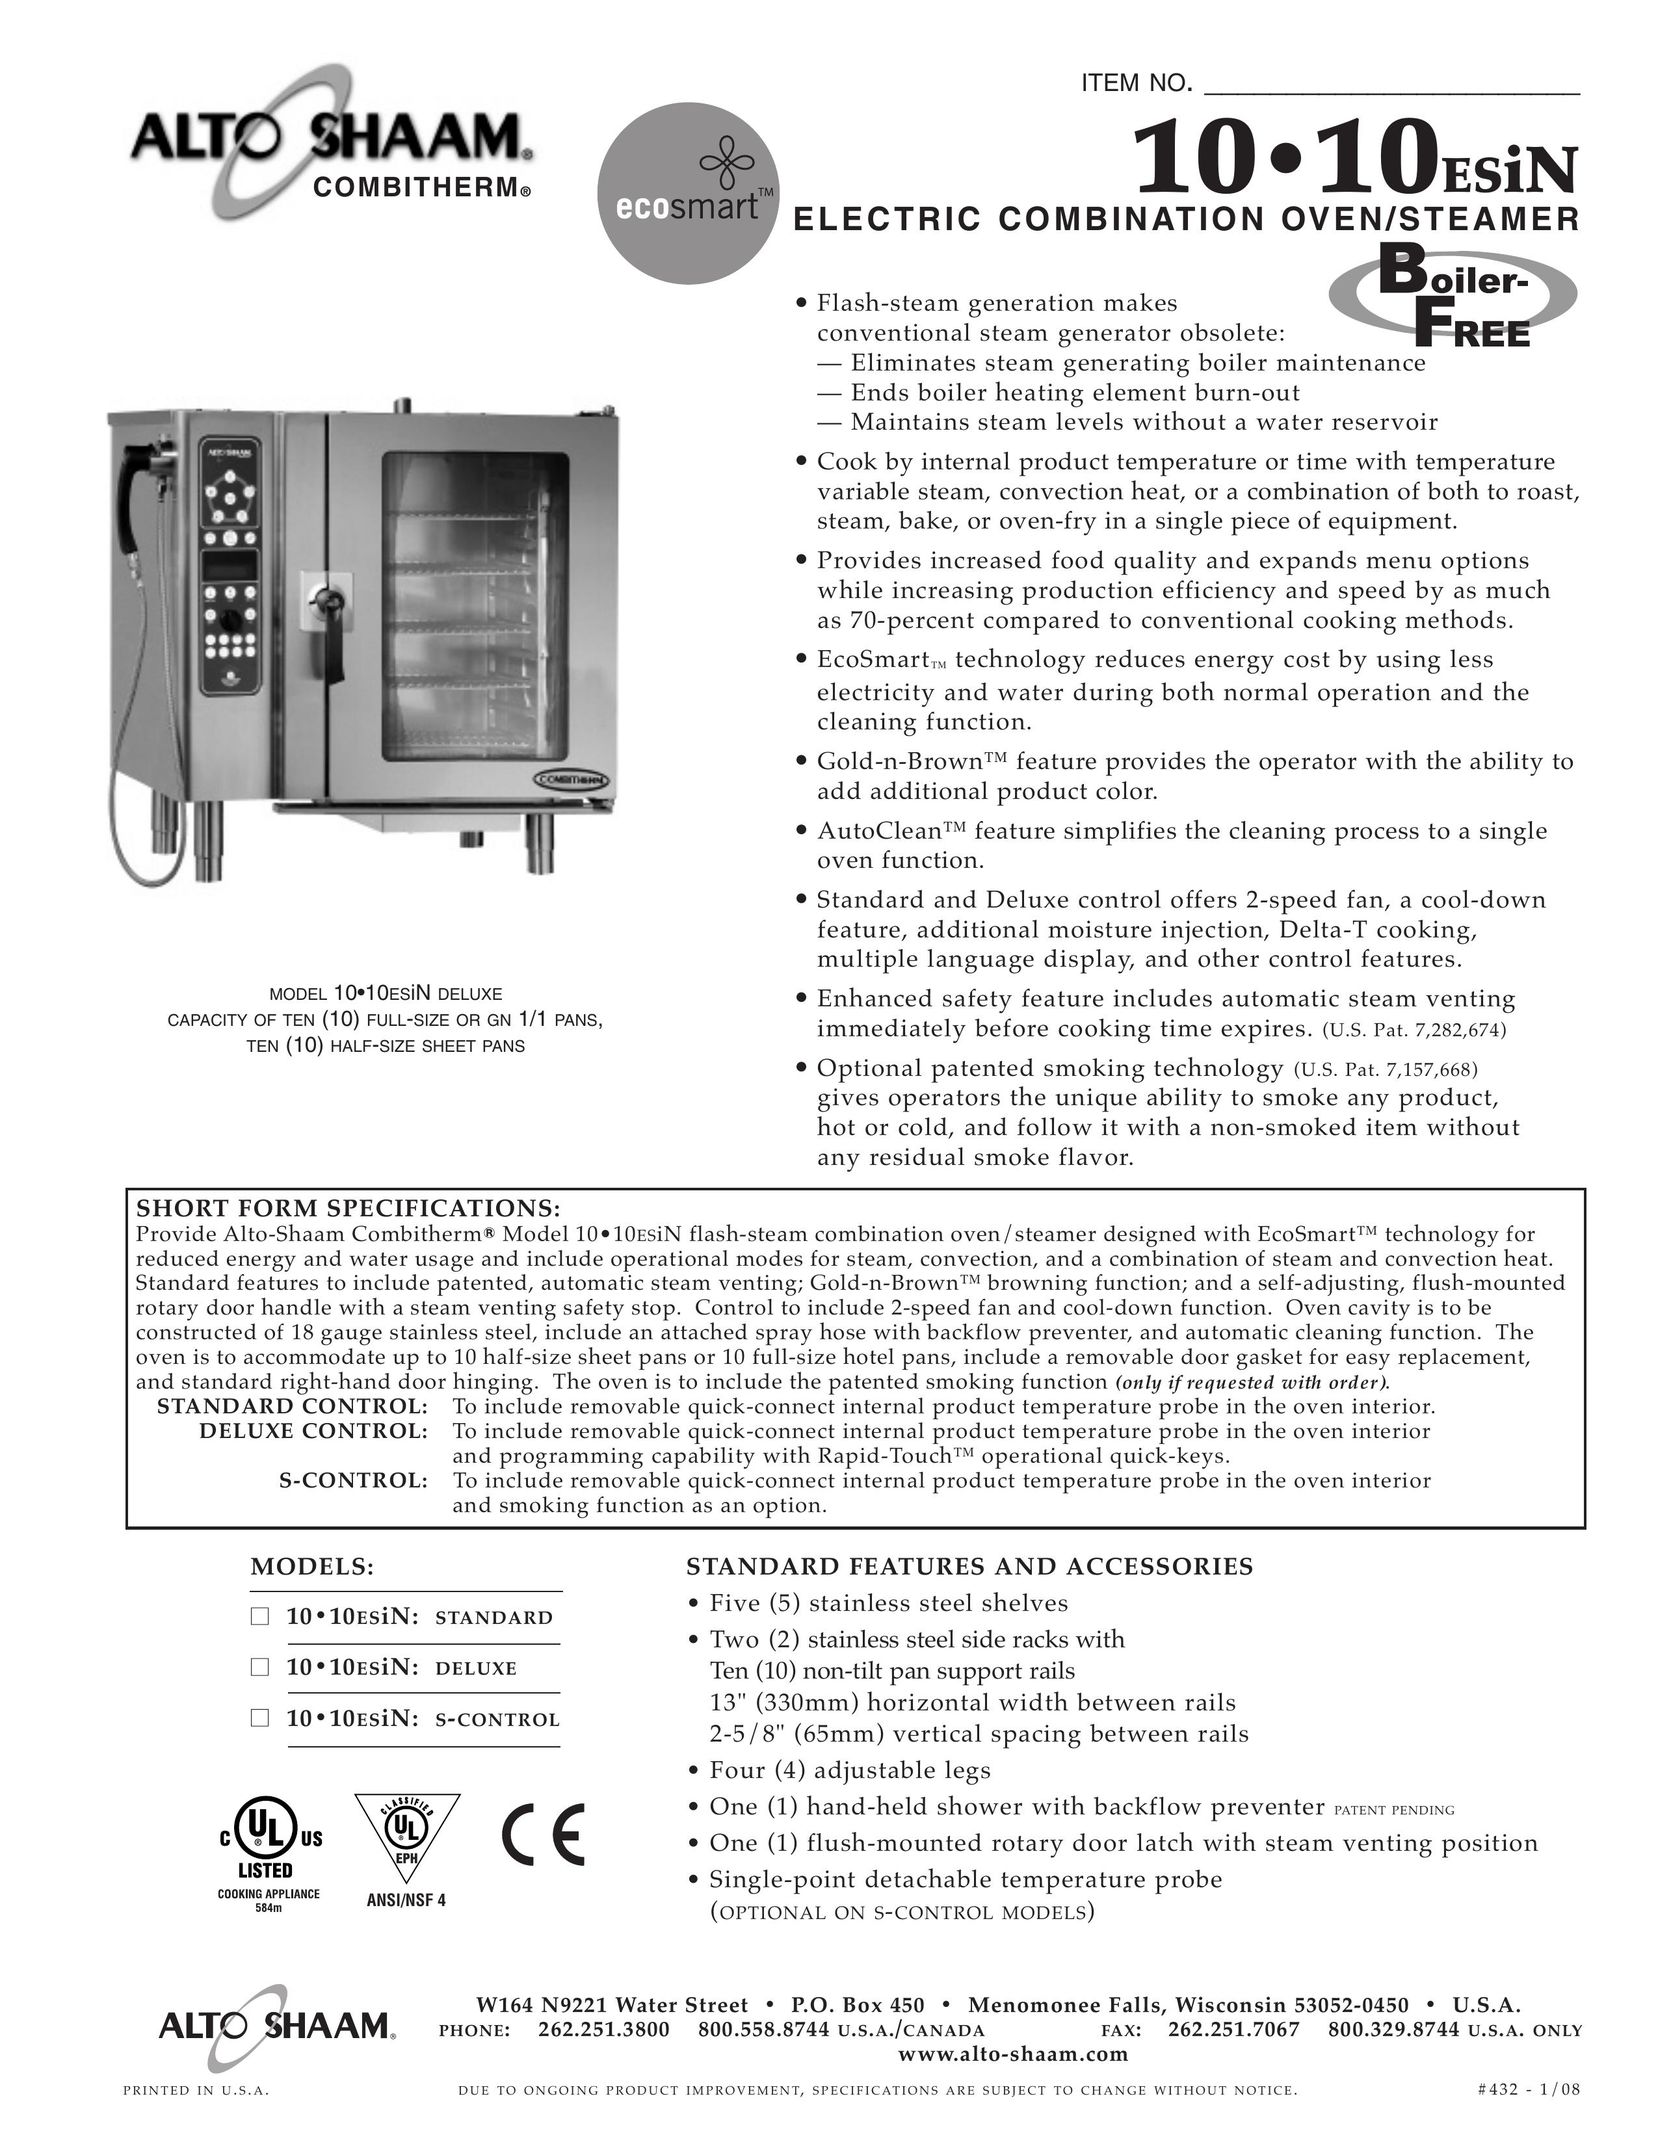 Alto-Shaam 10-10ESiN Oven User Manual